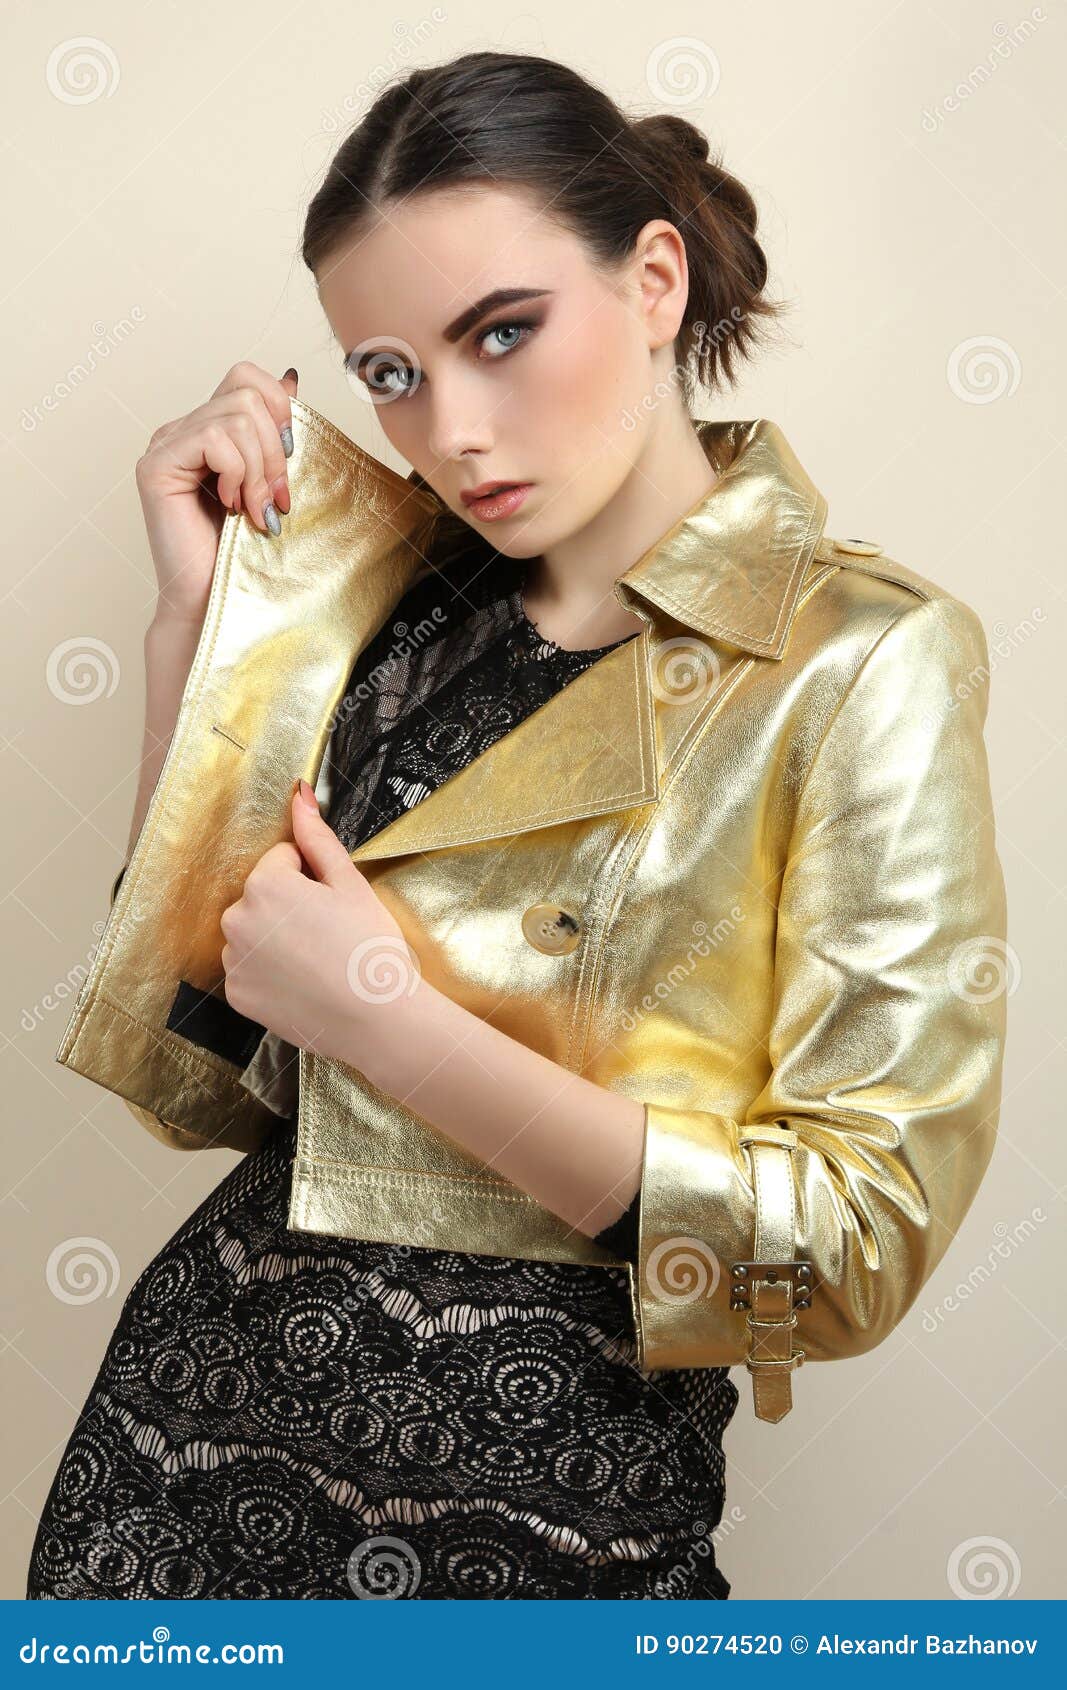 Girl in Black Dress and Leather Jacket Stock Photo - Image of elegant ...